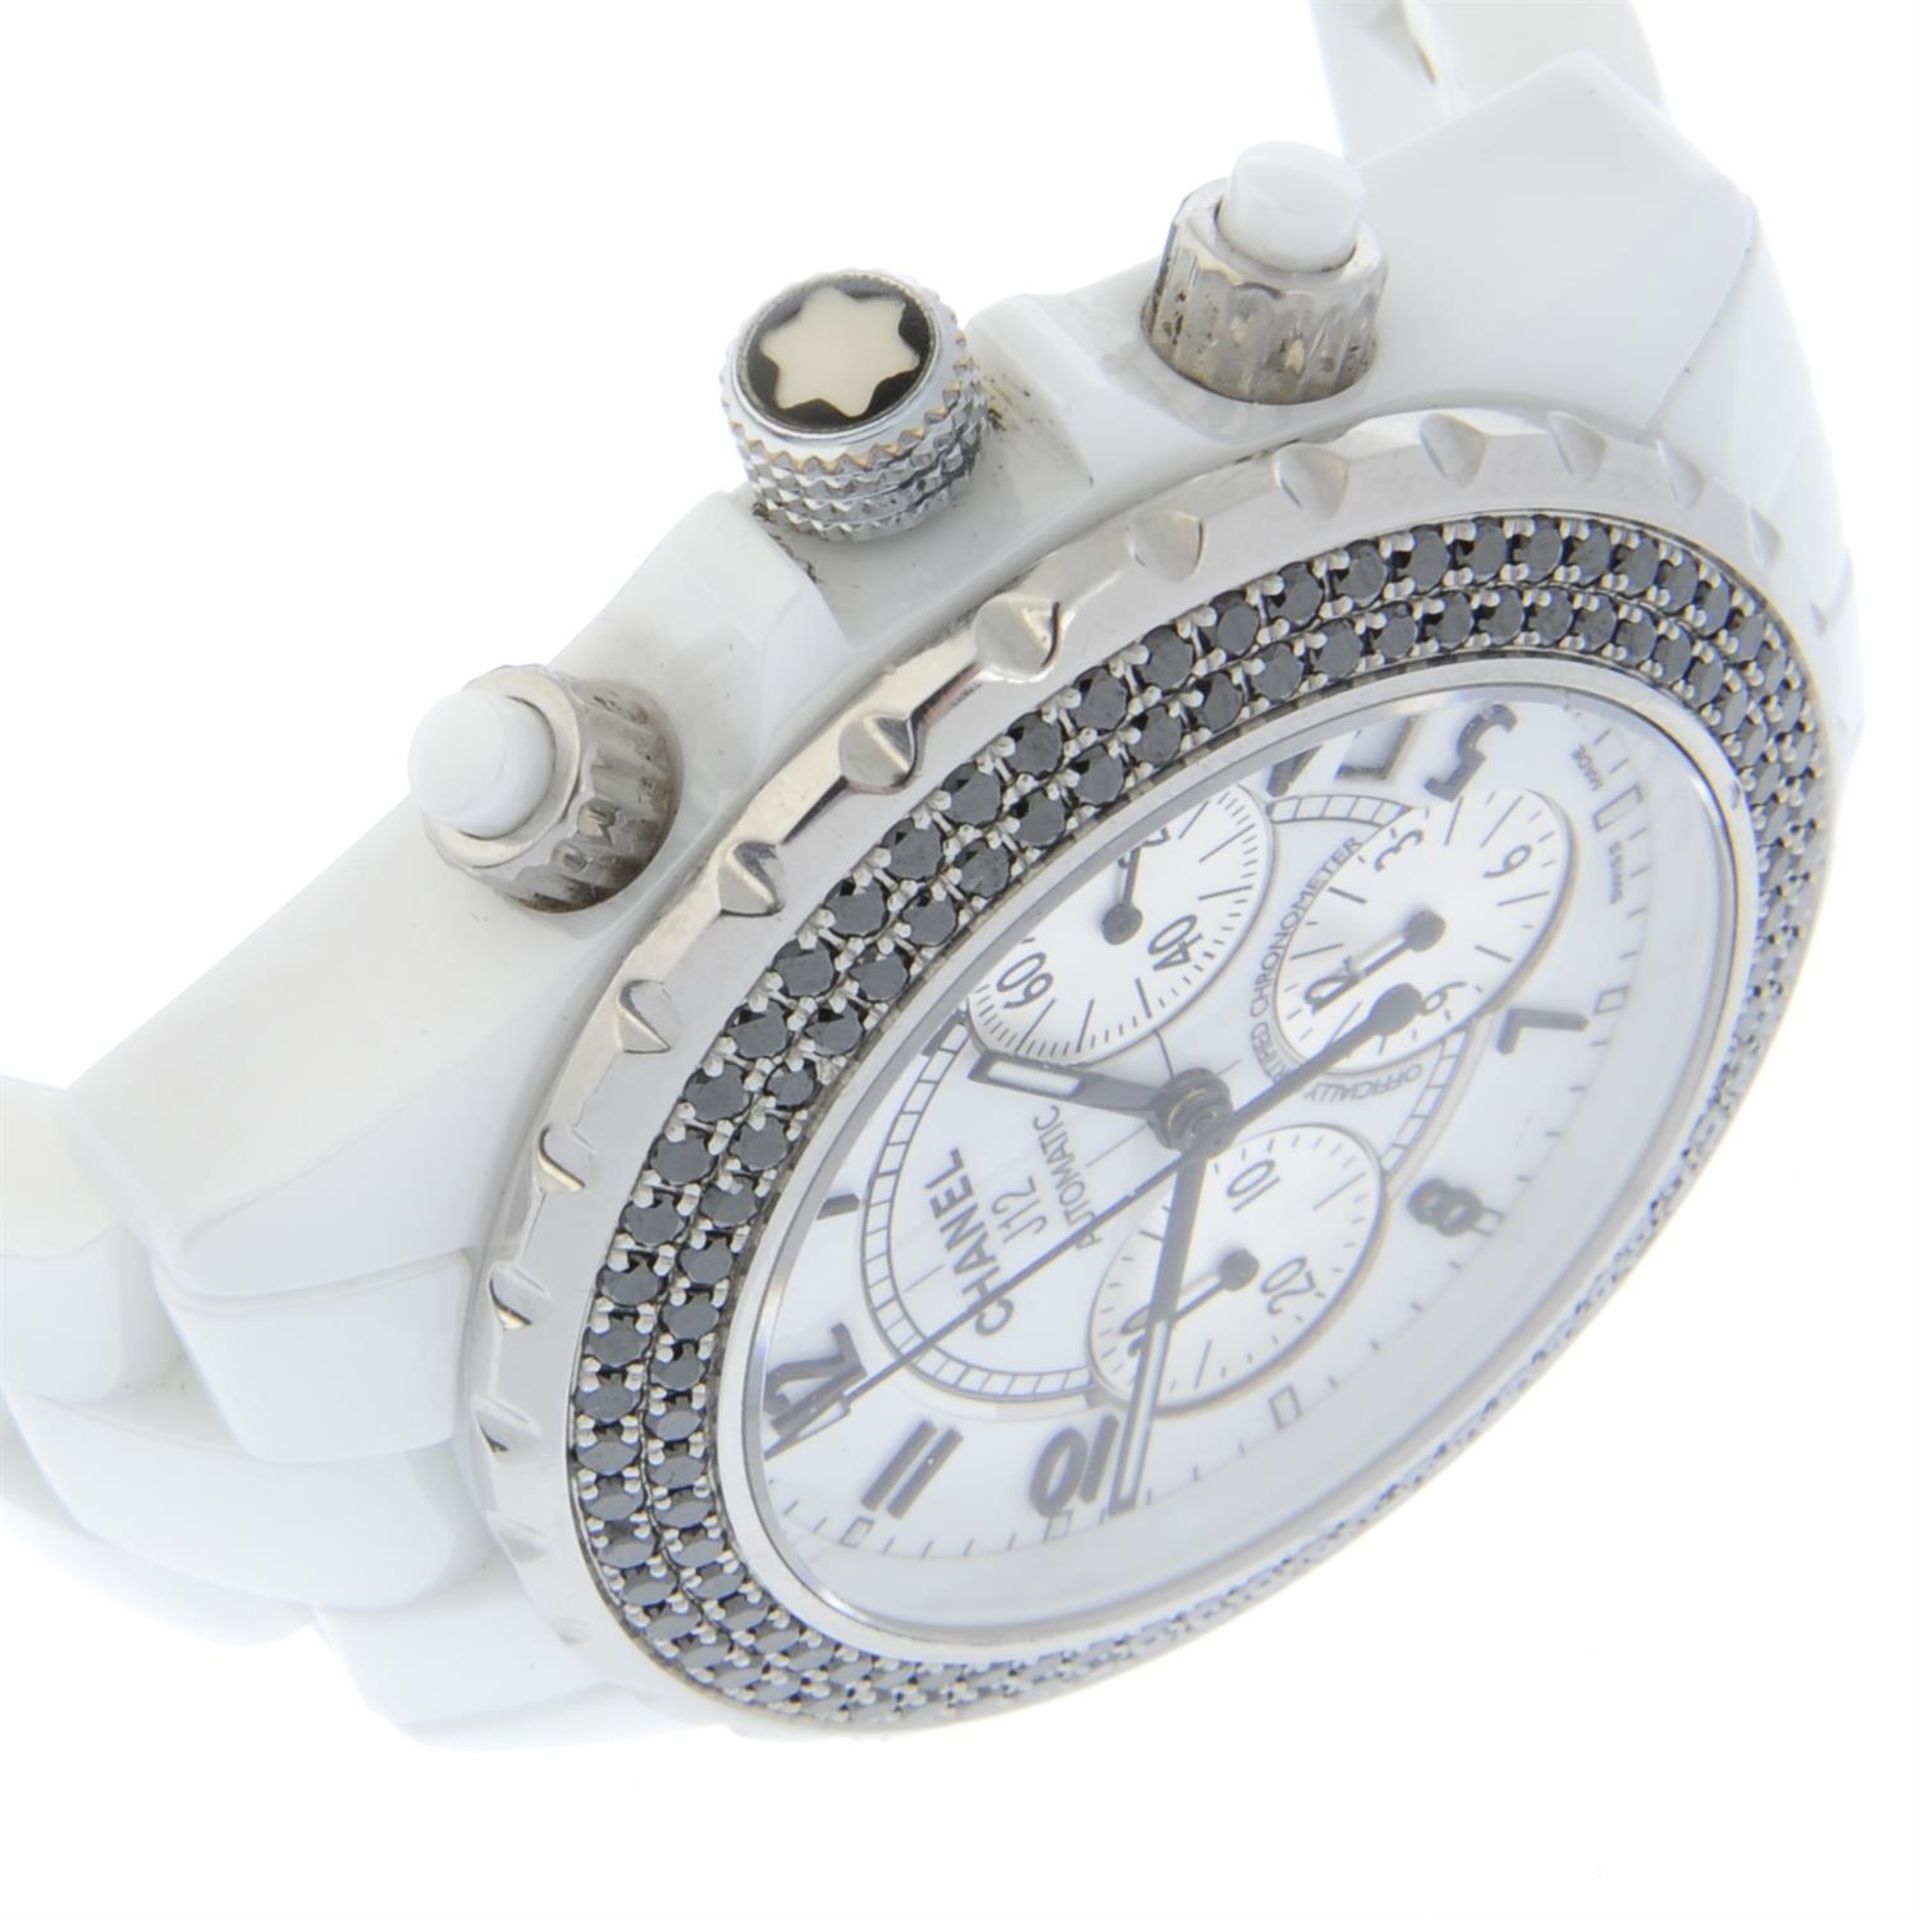 CHANEL - a ceramic J12 chronograph bracelet watch, 41mm. - Image 3 of 5